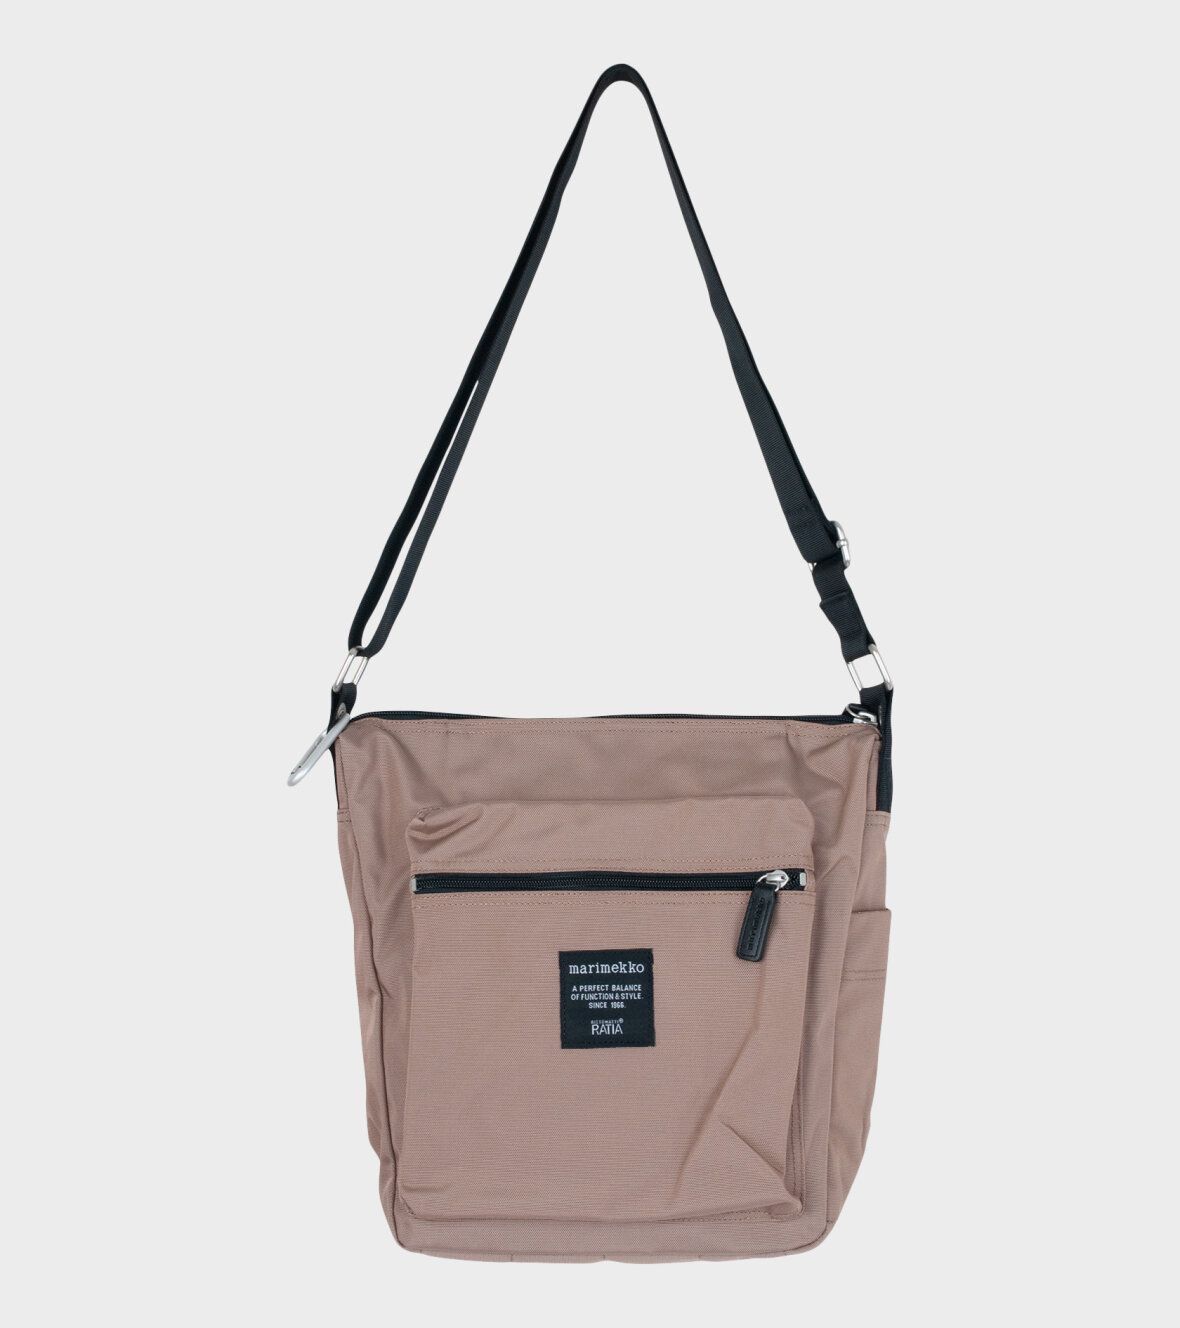 Marimekko Pal Bag Handbags Shoulder